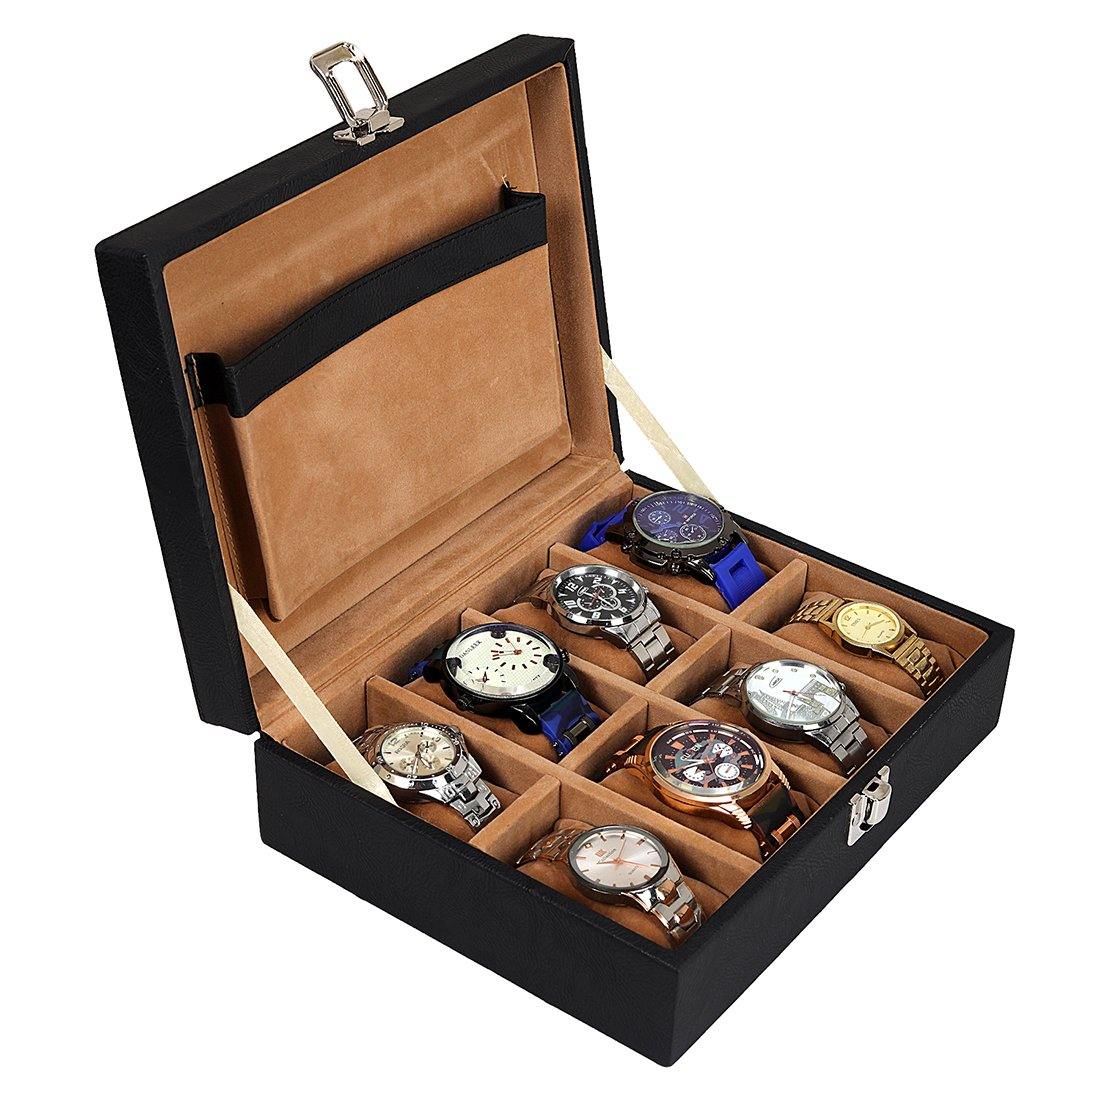 Buy Styleys Watch Box Organizer Watch Case 10 Slots (W05_Black) at Amazon.in